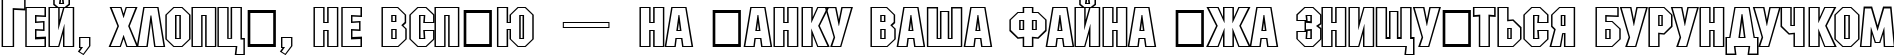 Пример написания шрифтом a_MachinaNovaCpsOtl текста на украинском